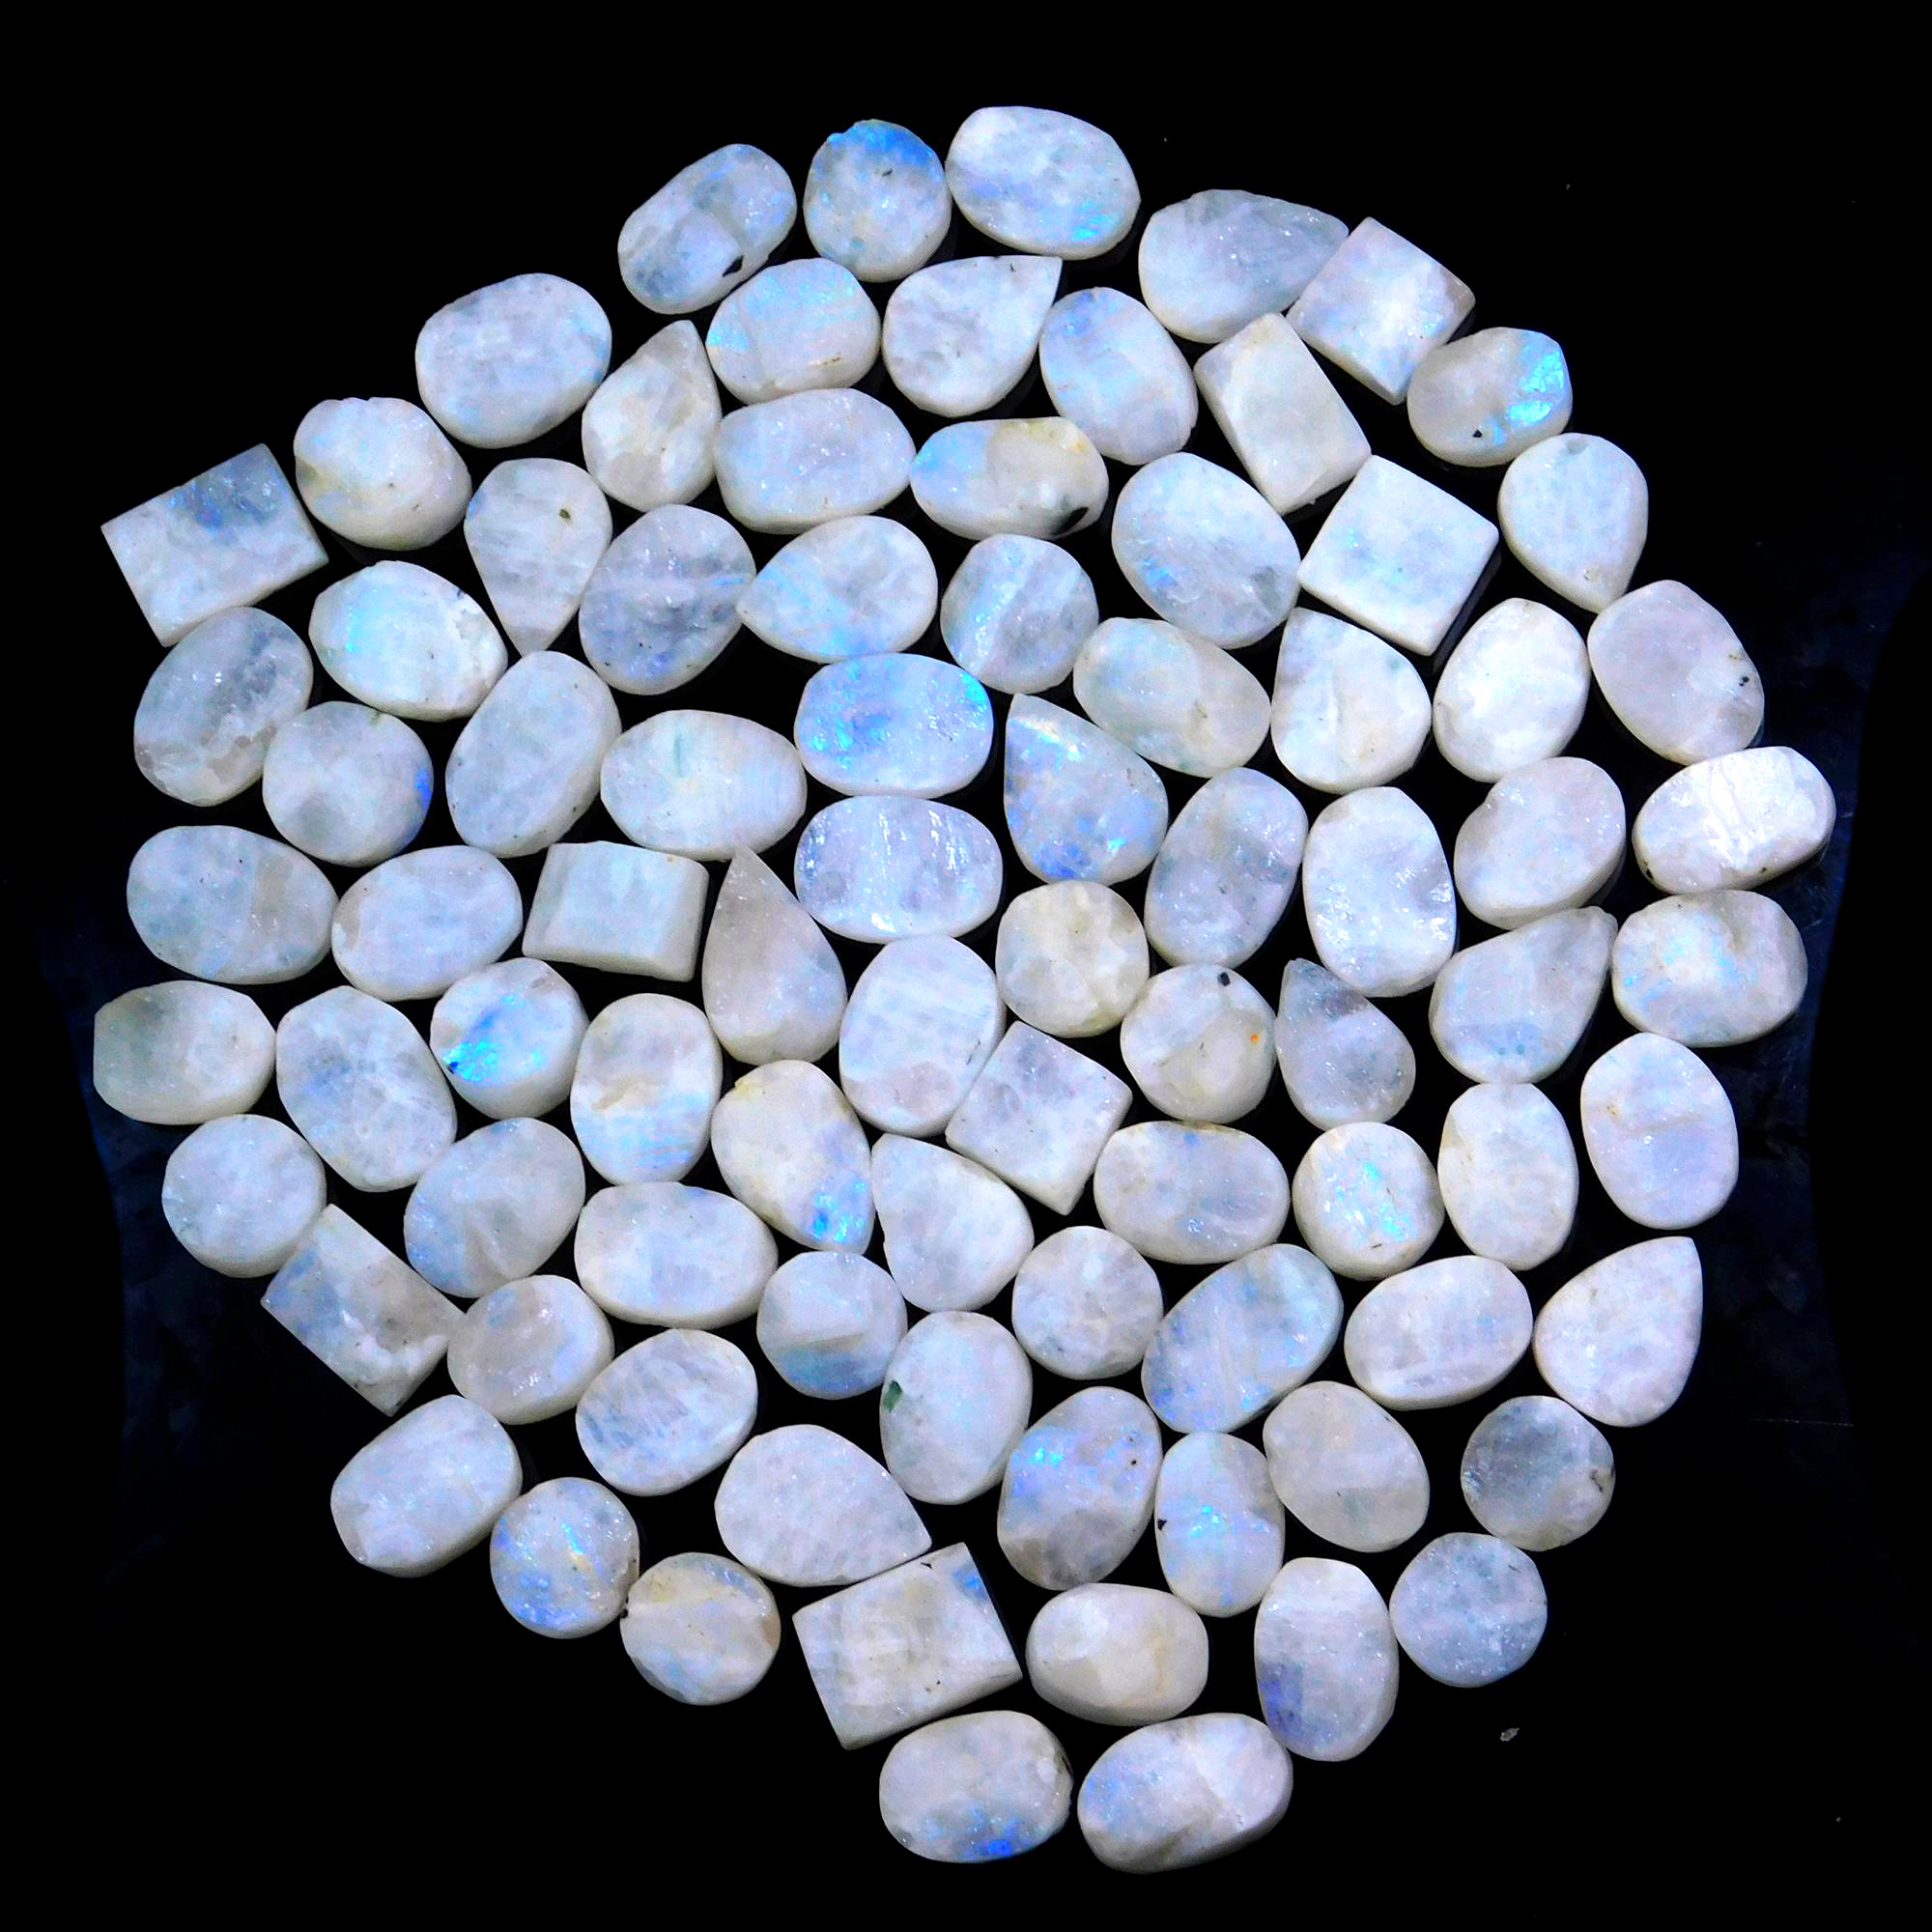 86 Pcs Natural Moonstone Druzy 1300cts Unpolished Rough Loose Gemstone Wholesale Lot Size 21x13 17x12mm